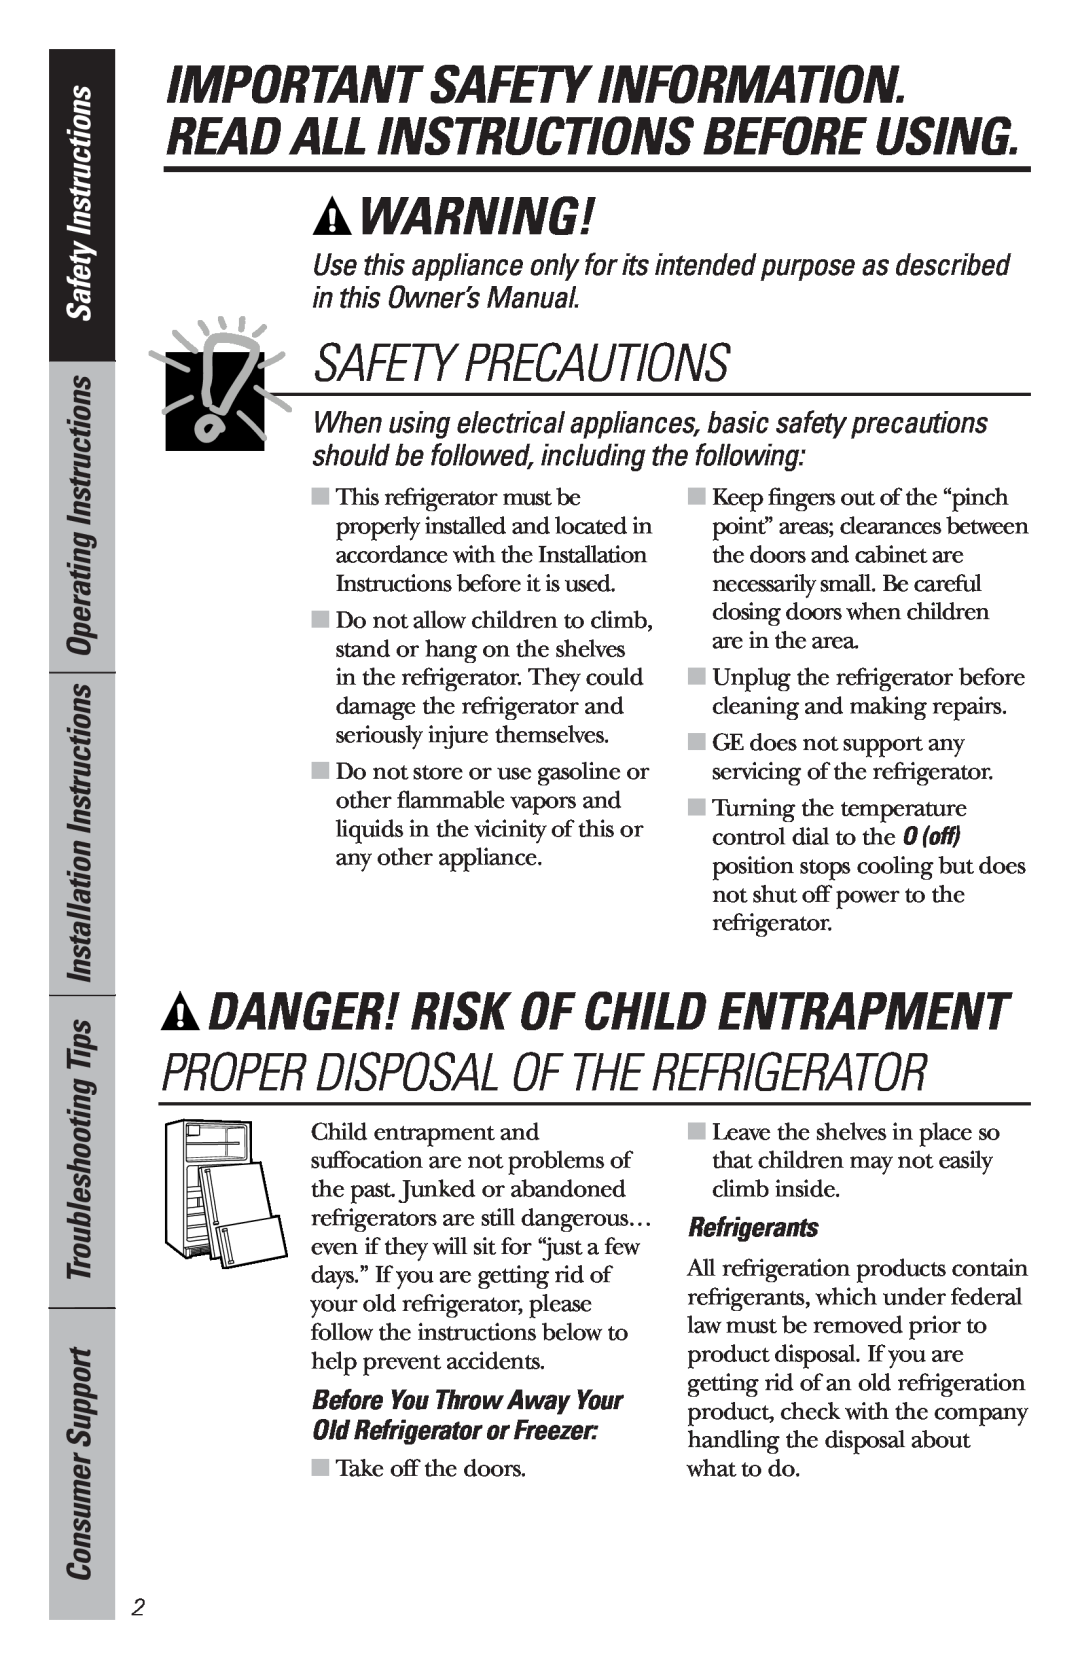 GE WMR04GAV Safety Precautions, Danger! Risk Of Child Entrapment, Tips, Instructions Safety Instructions, Refrigerants 